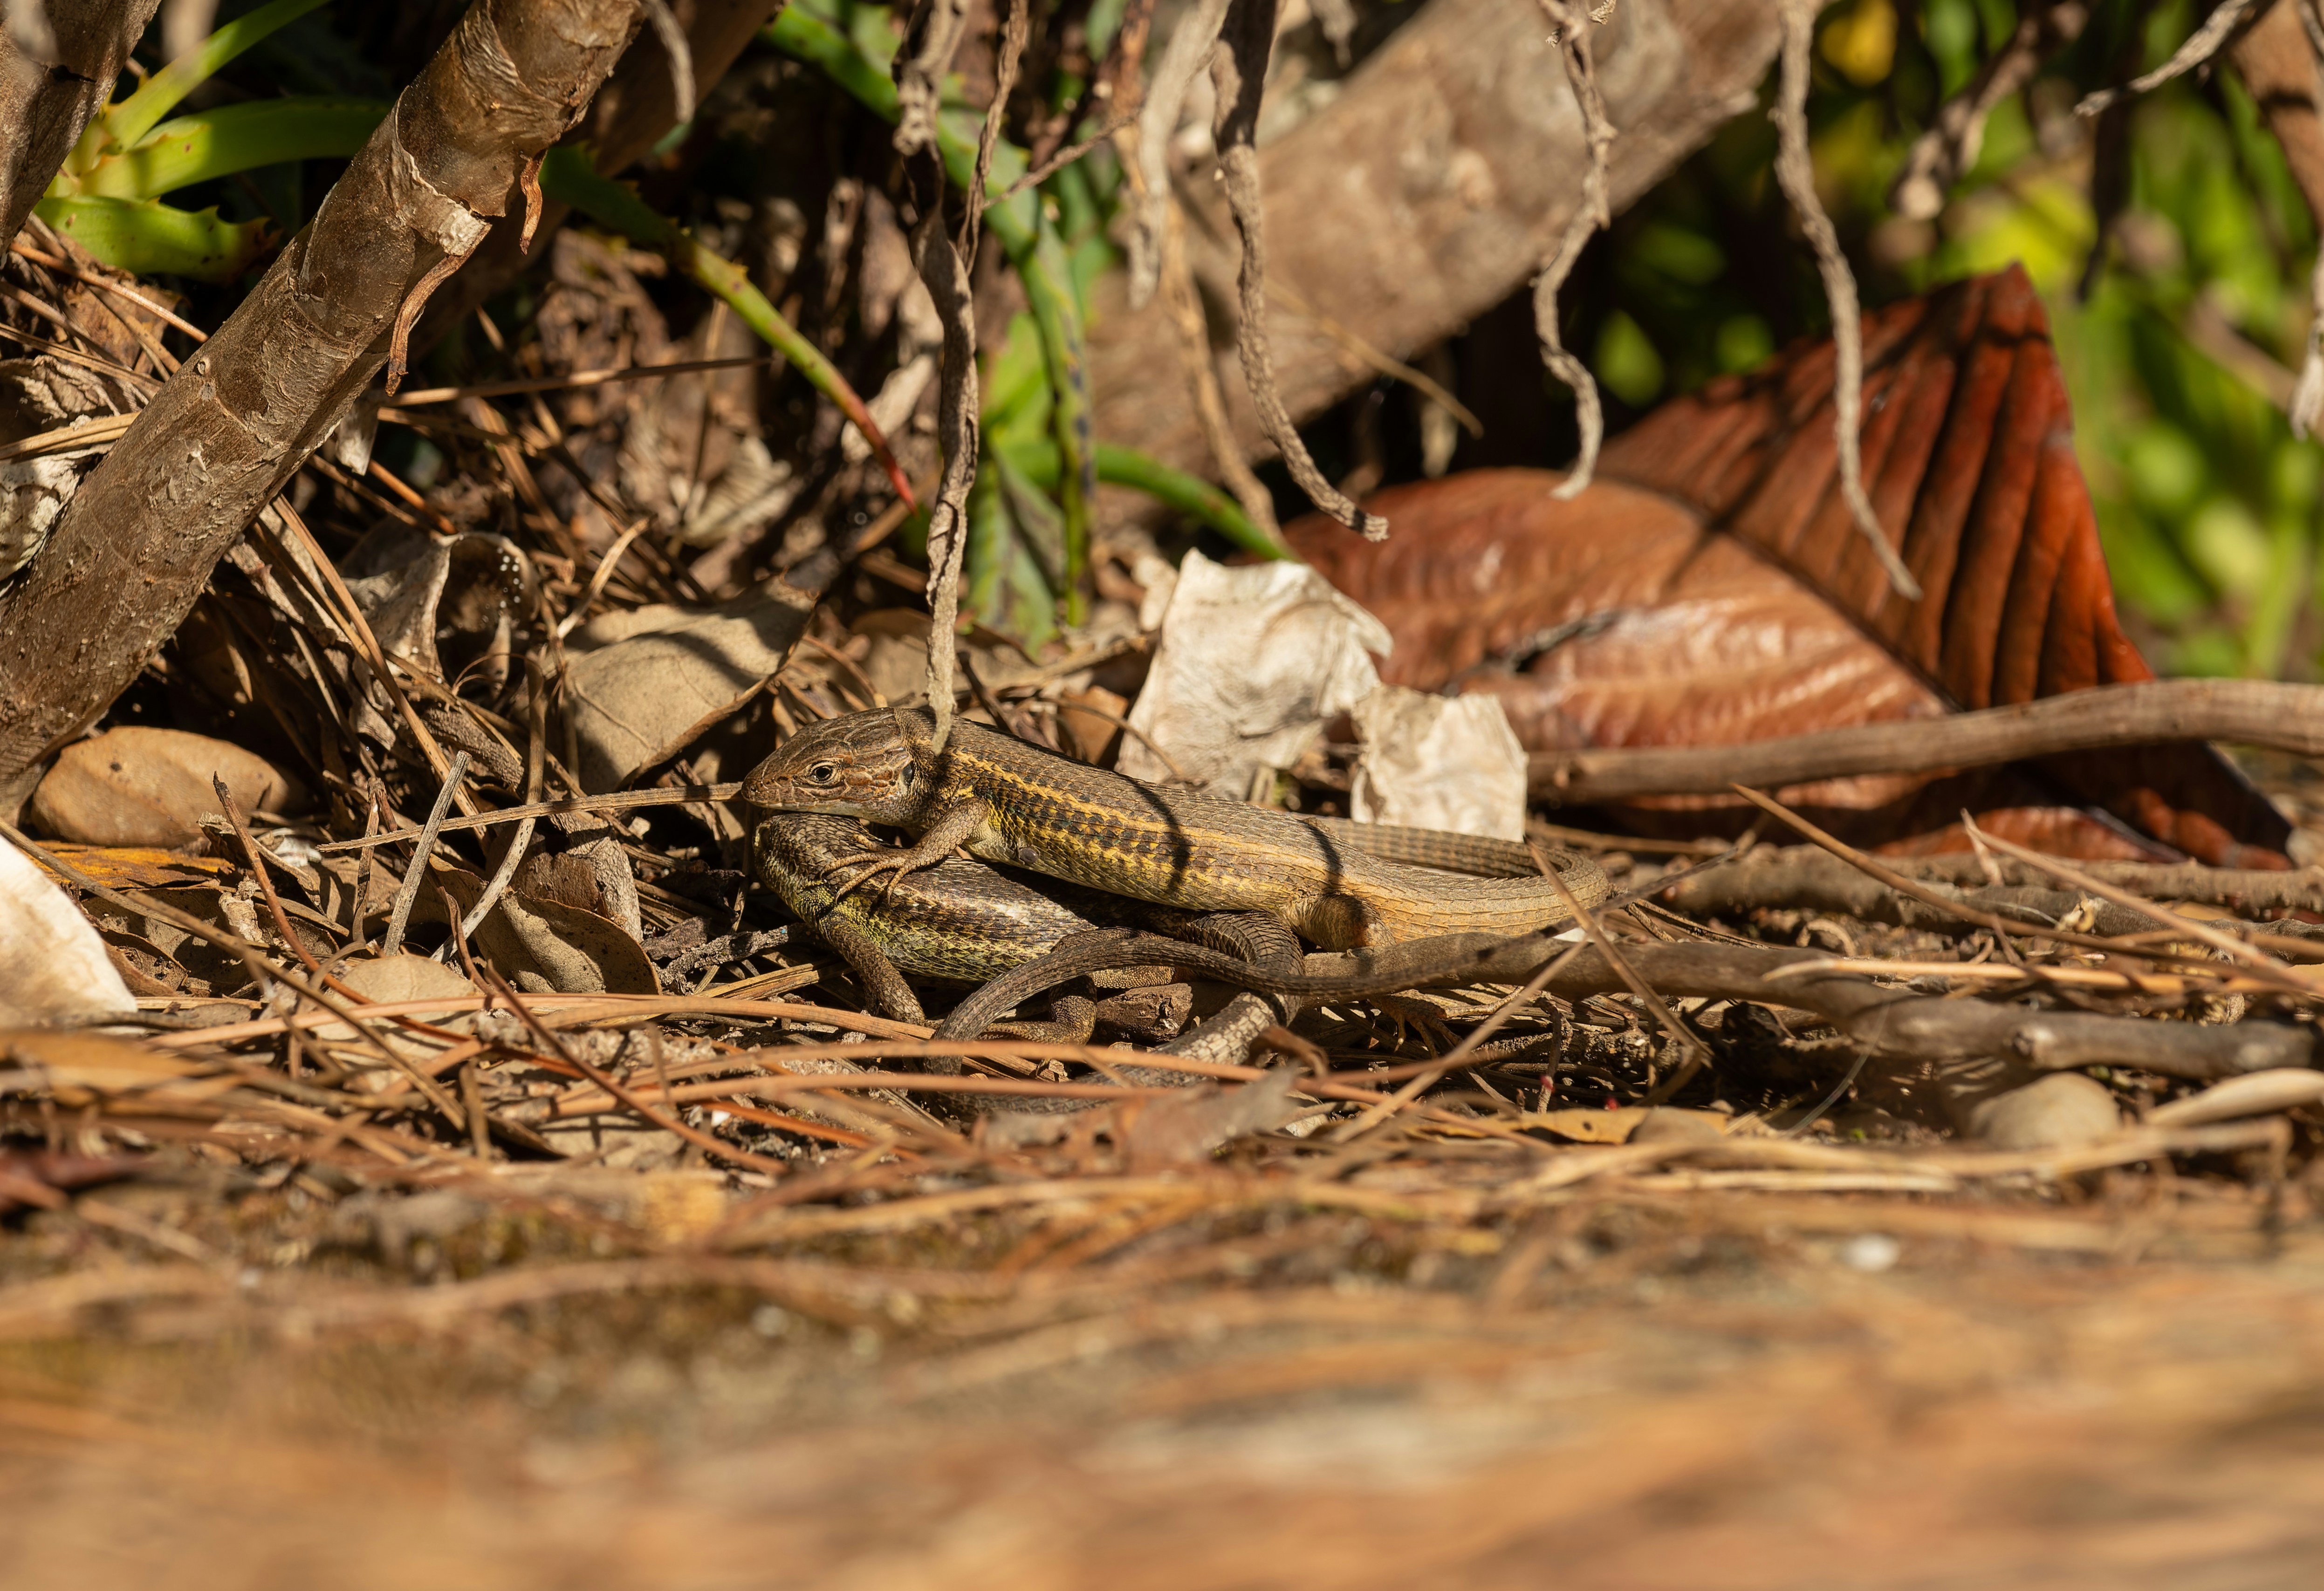 Large Psammodromus lizard. Mating rituals.